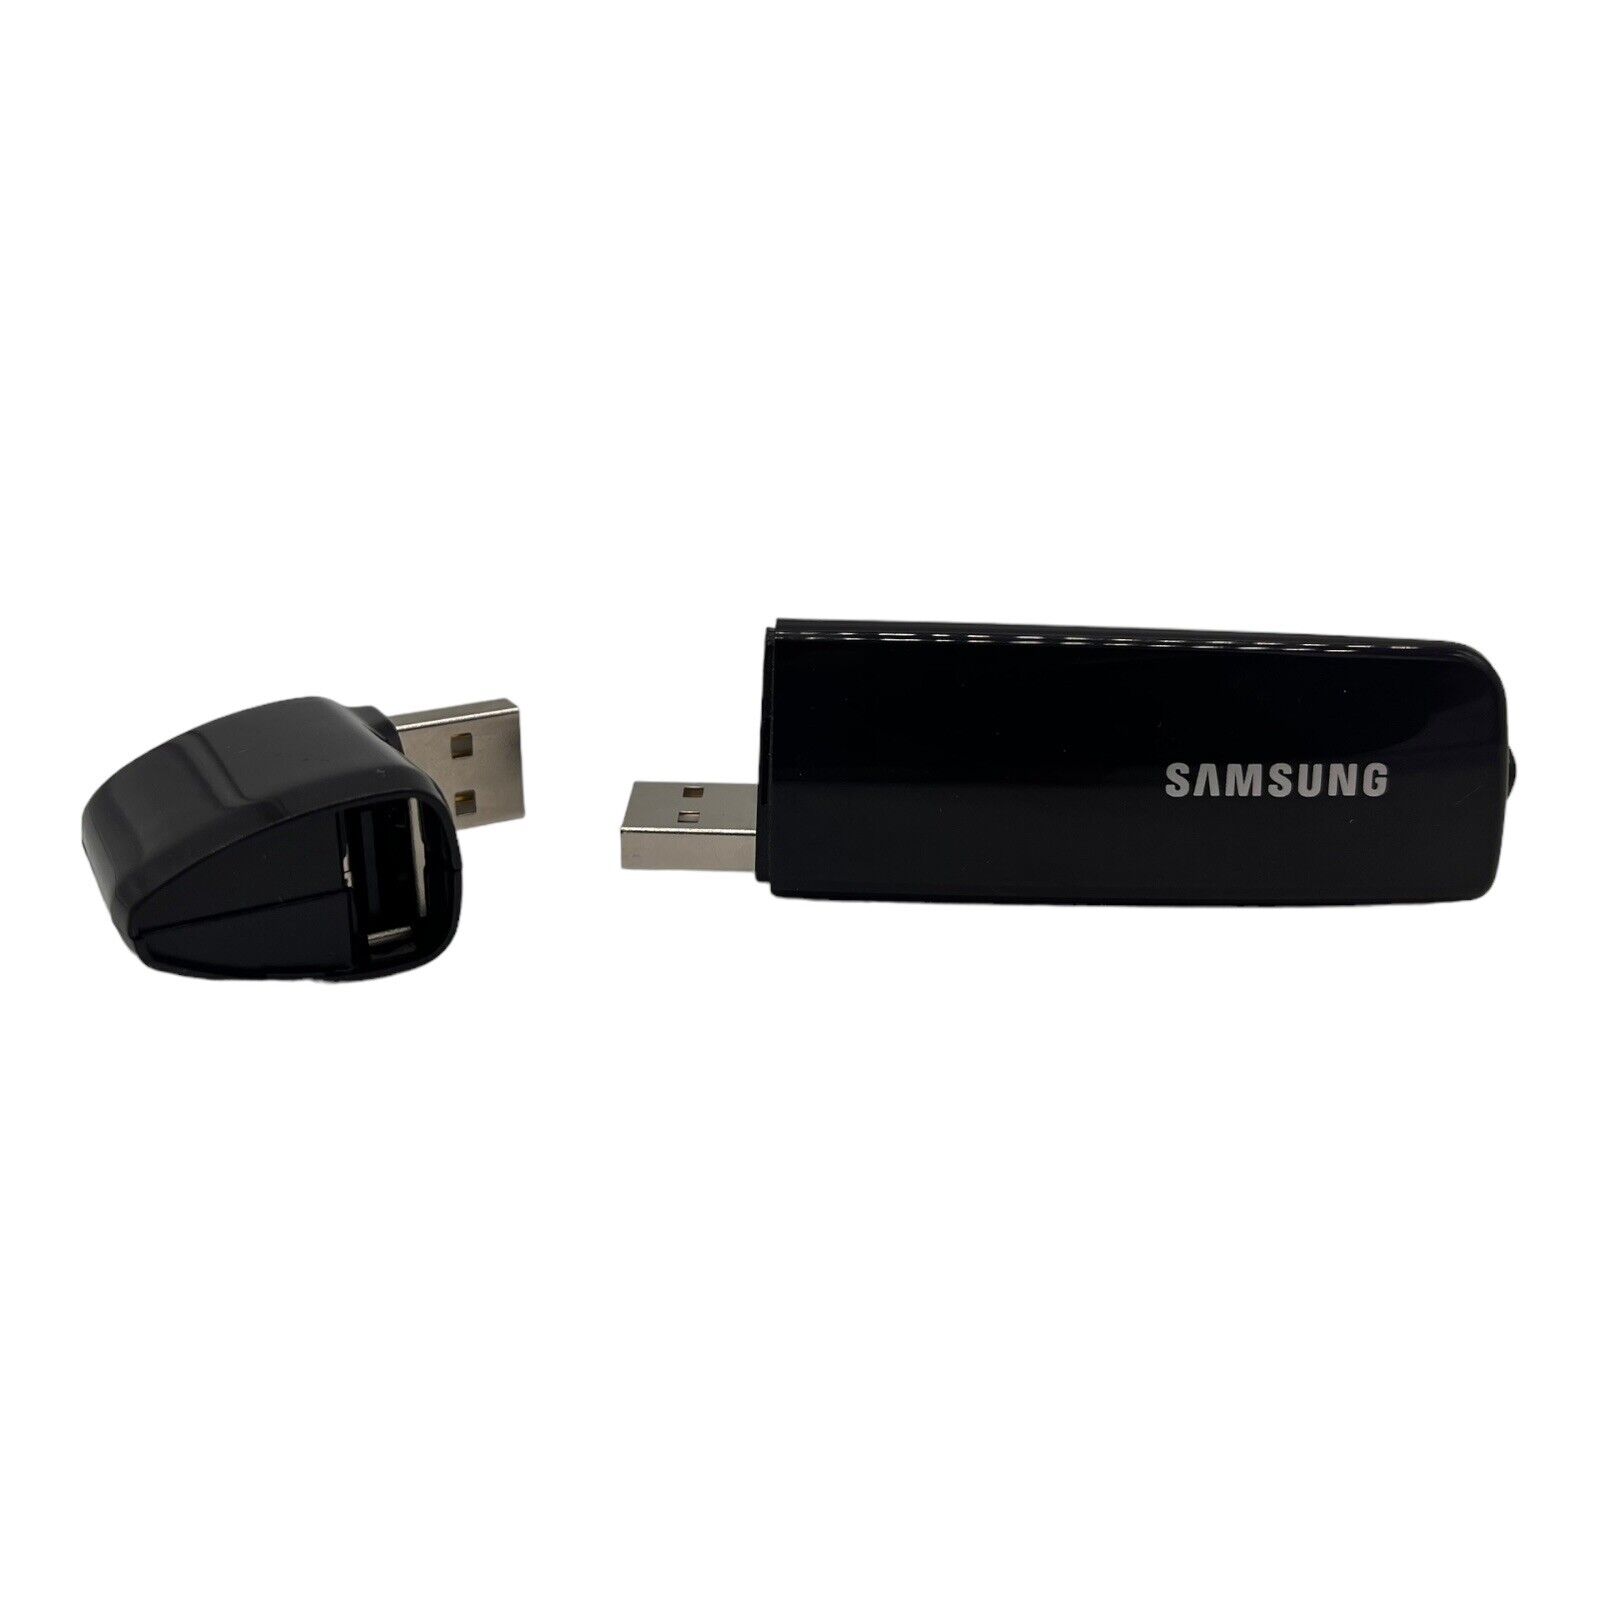 Samsung WIS09ABGN Wireless LAN Adapter for Smart TV - 2009 Model